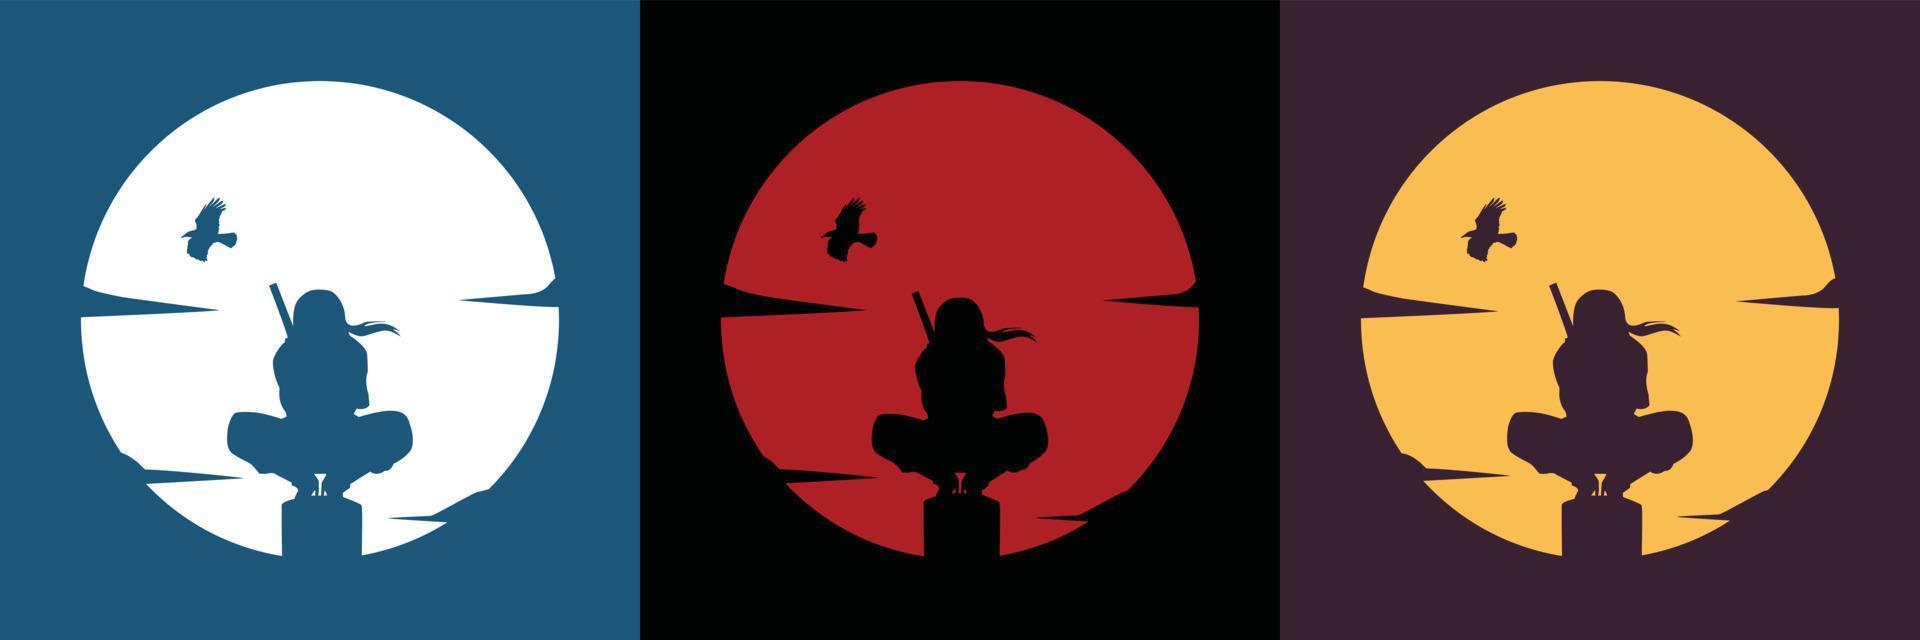 Ninja silhouette against full moon background in three frames vector